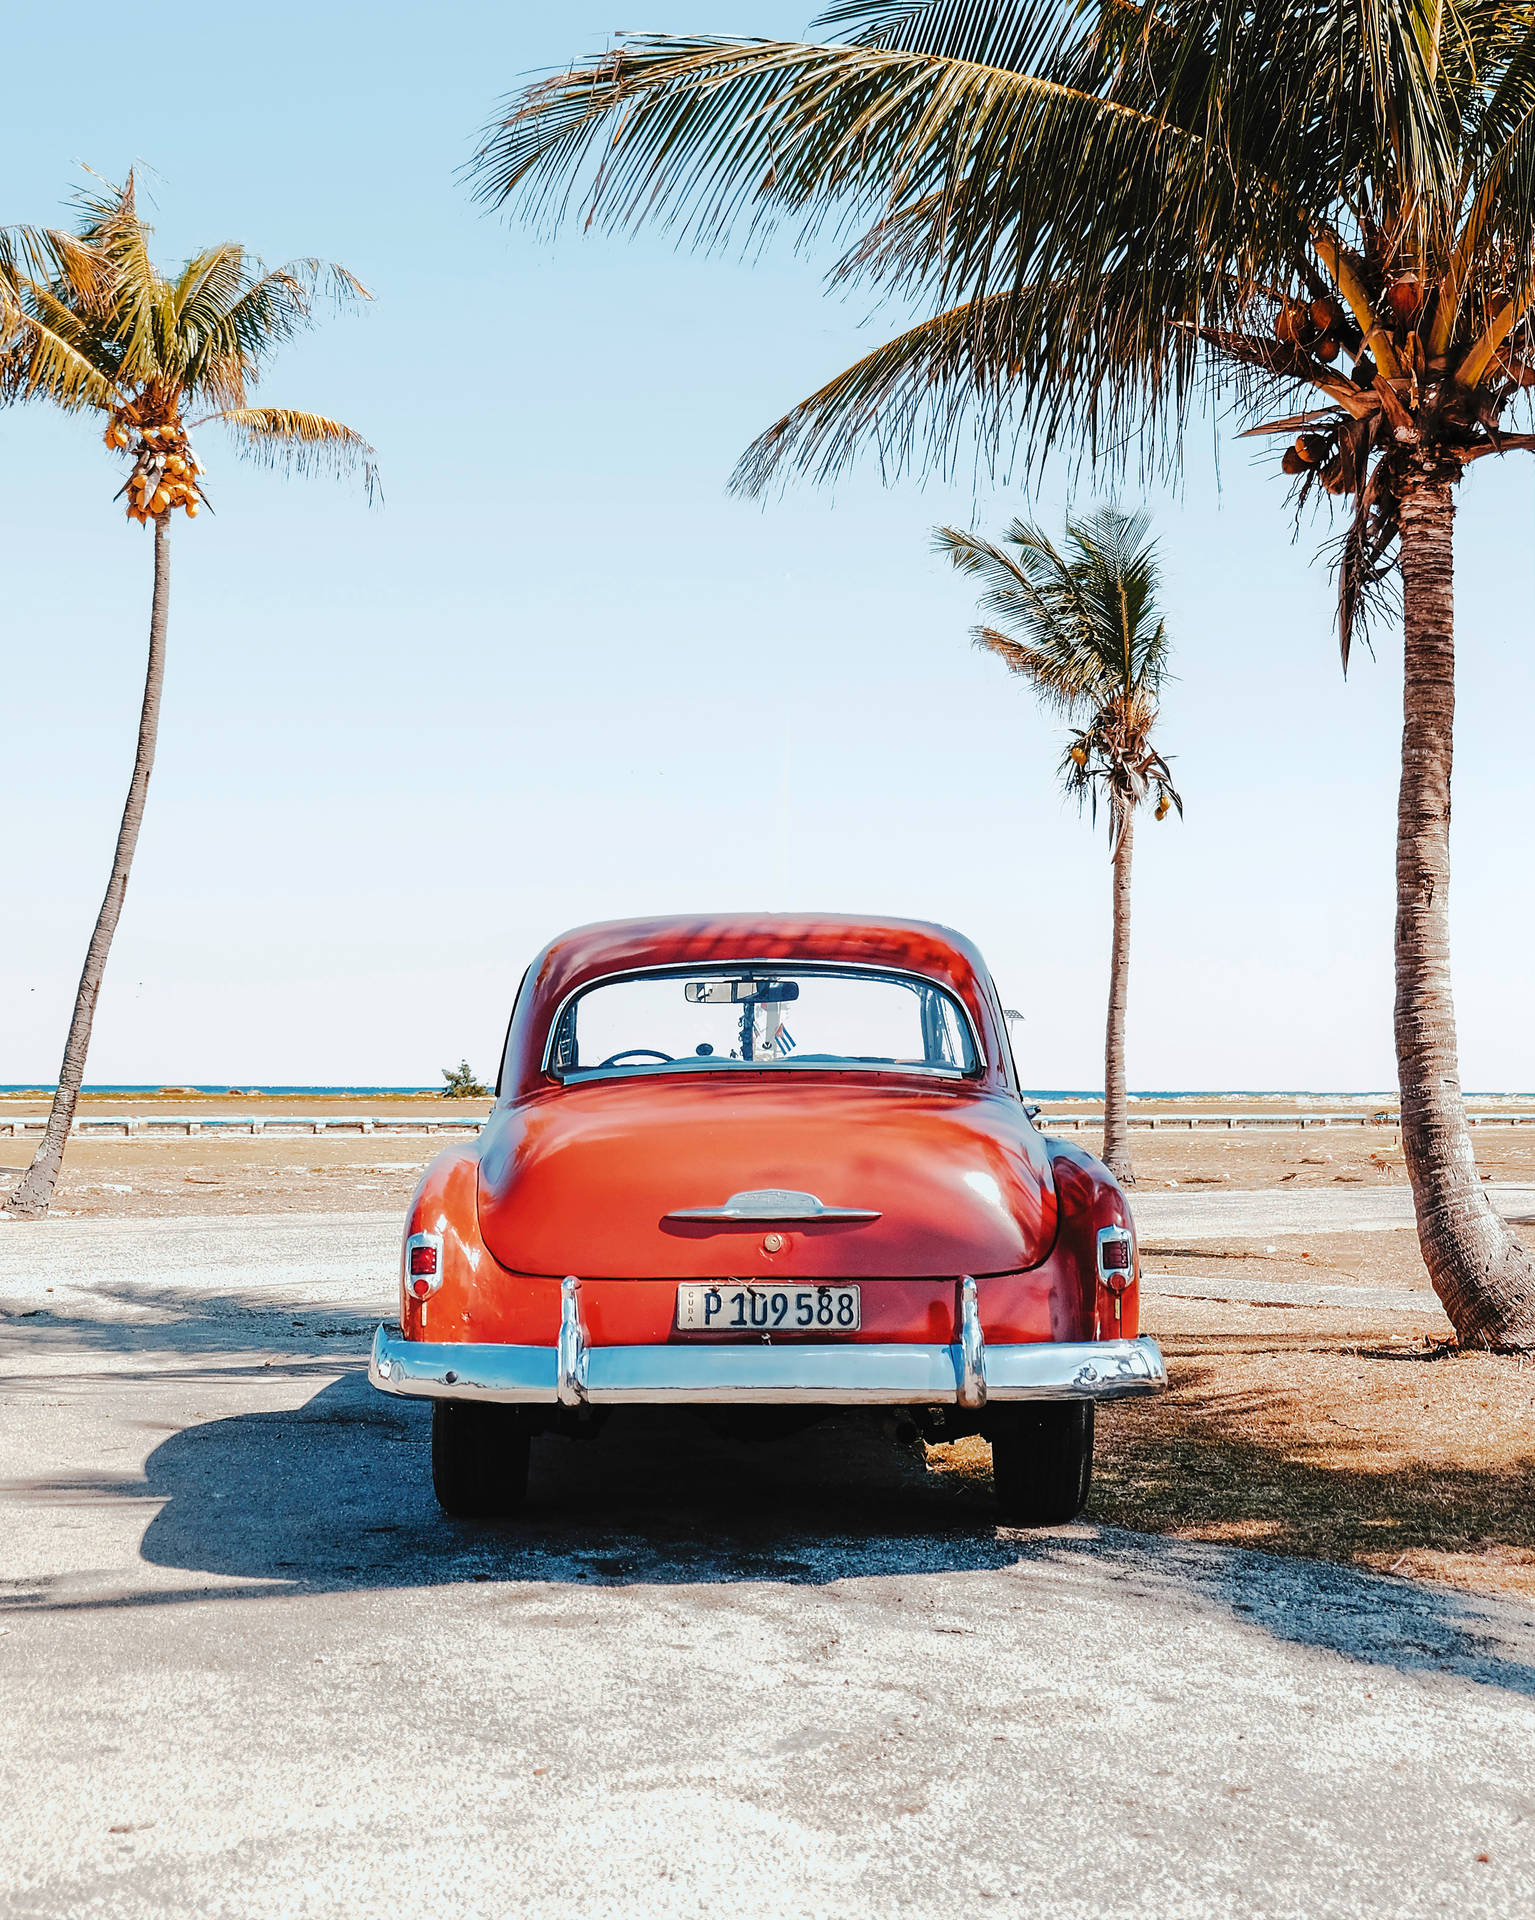 Red Classic Car In Cuba Wallpaper